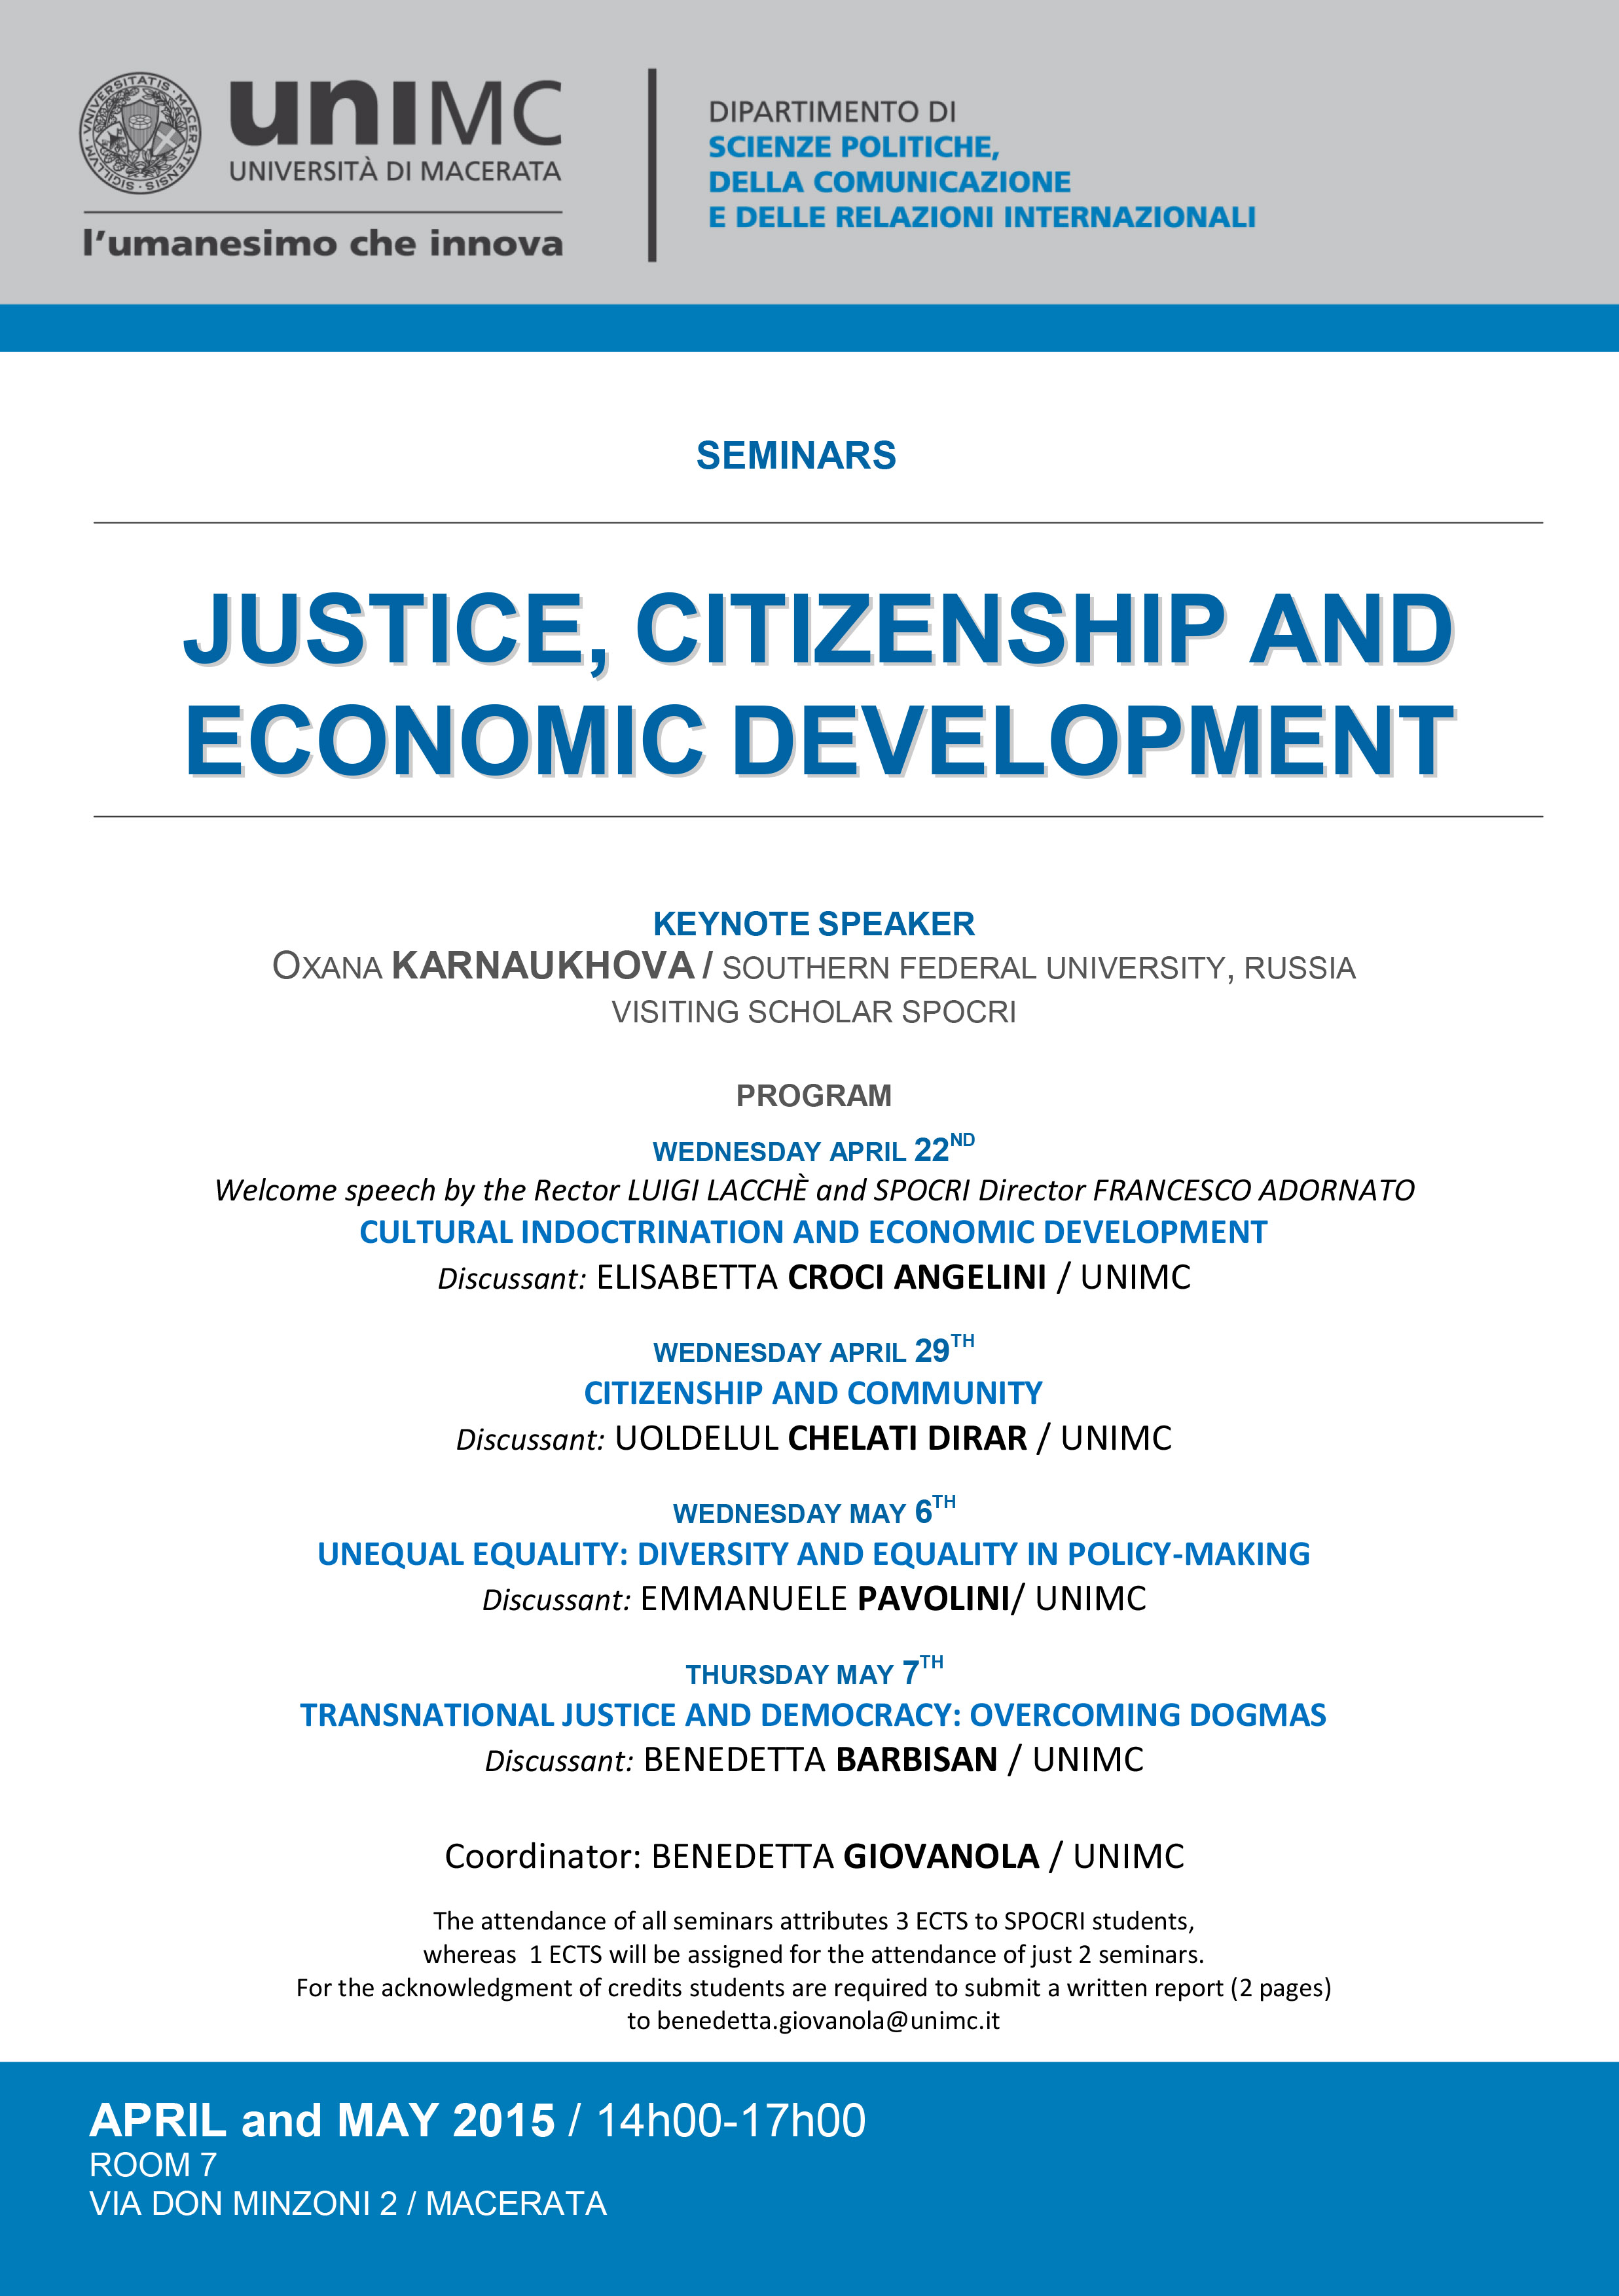 SEMINARS. Justice, Citizenship and Economic Development